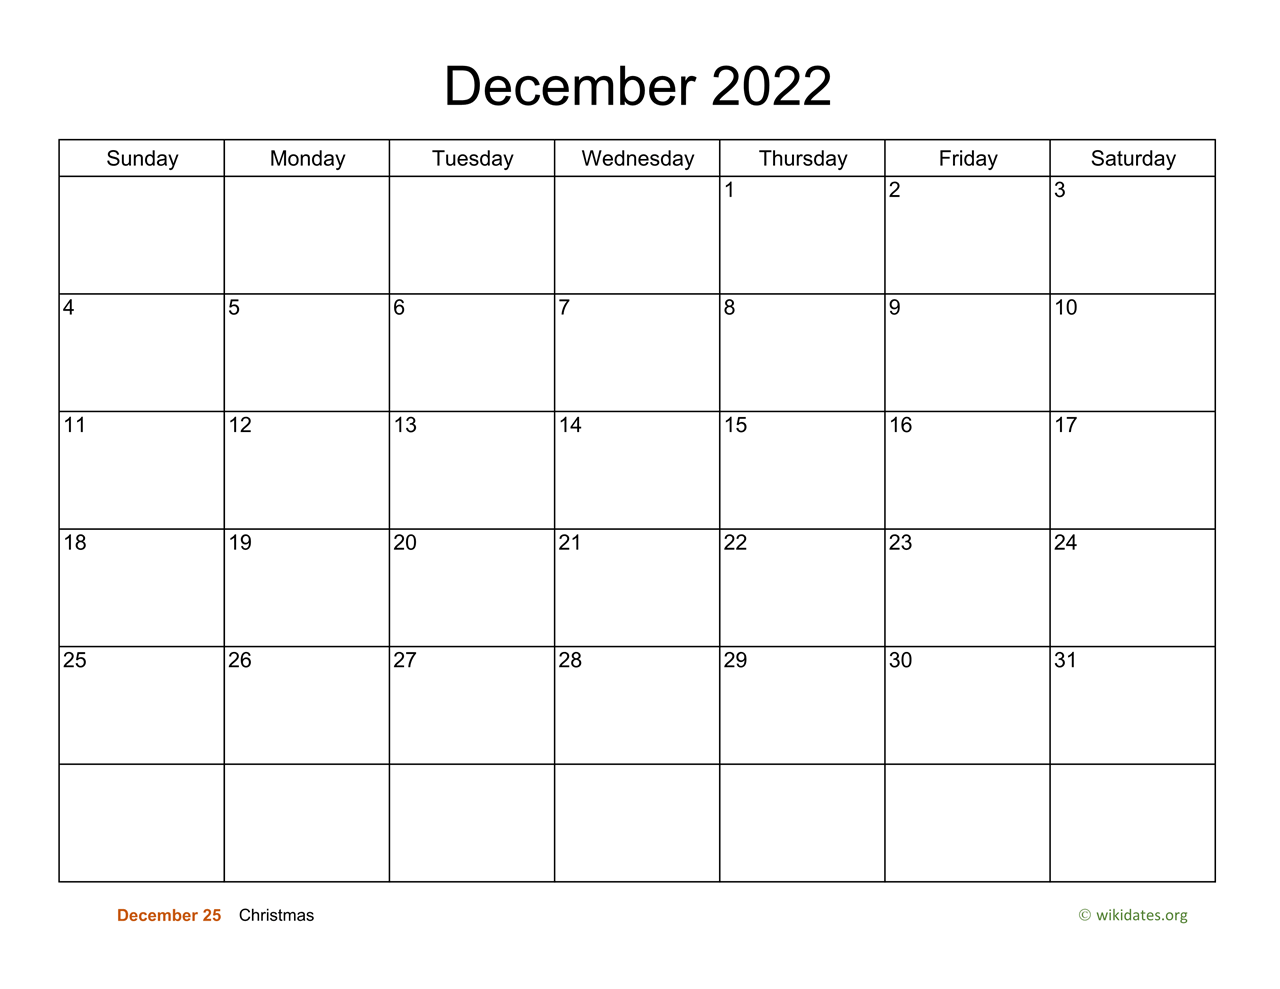 Decemberr 2022 Calendar Basic Calendar For December 2022 | Wikidates.org